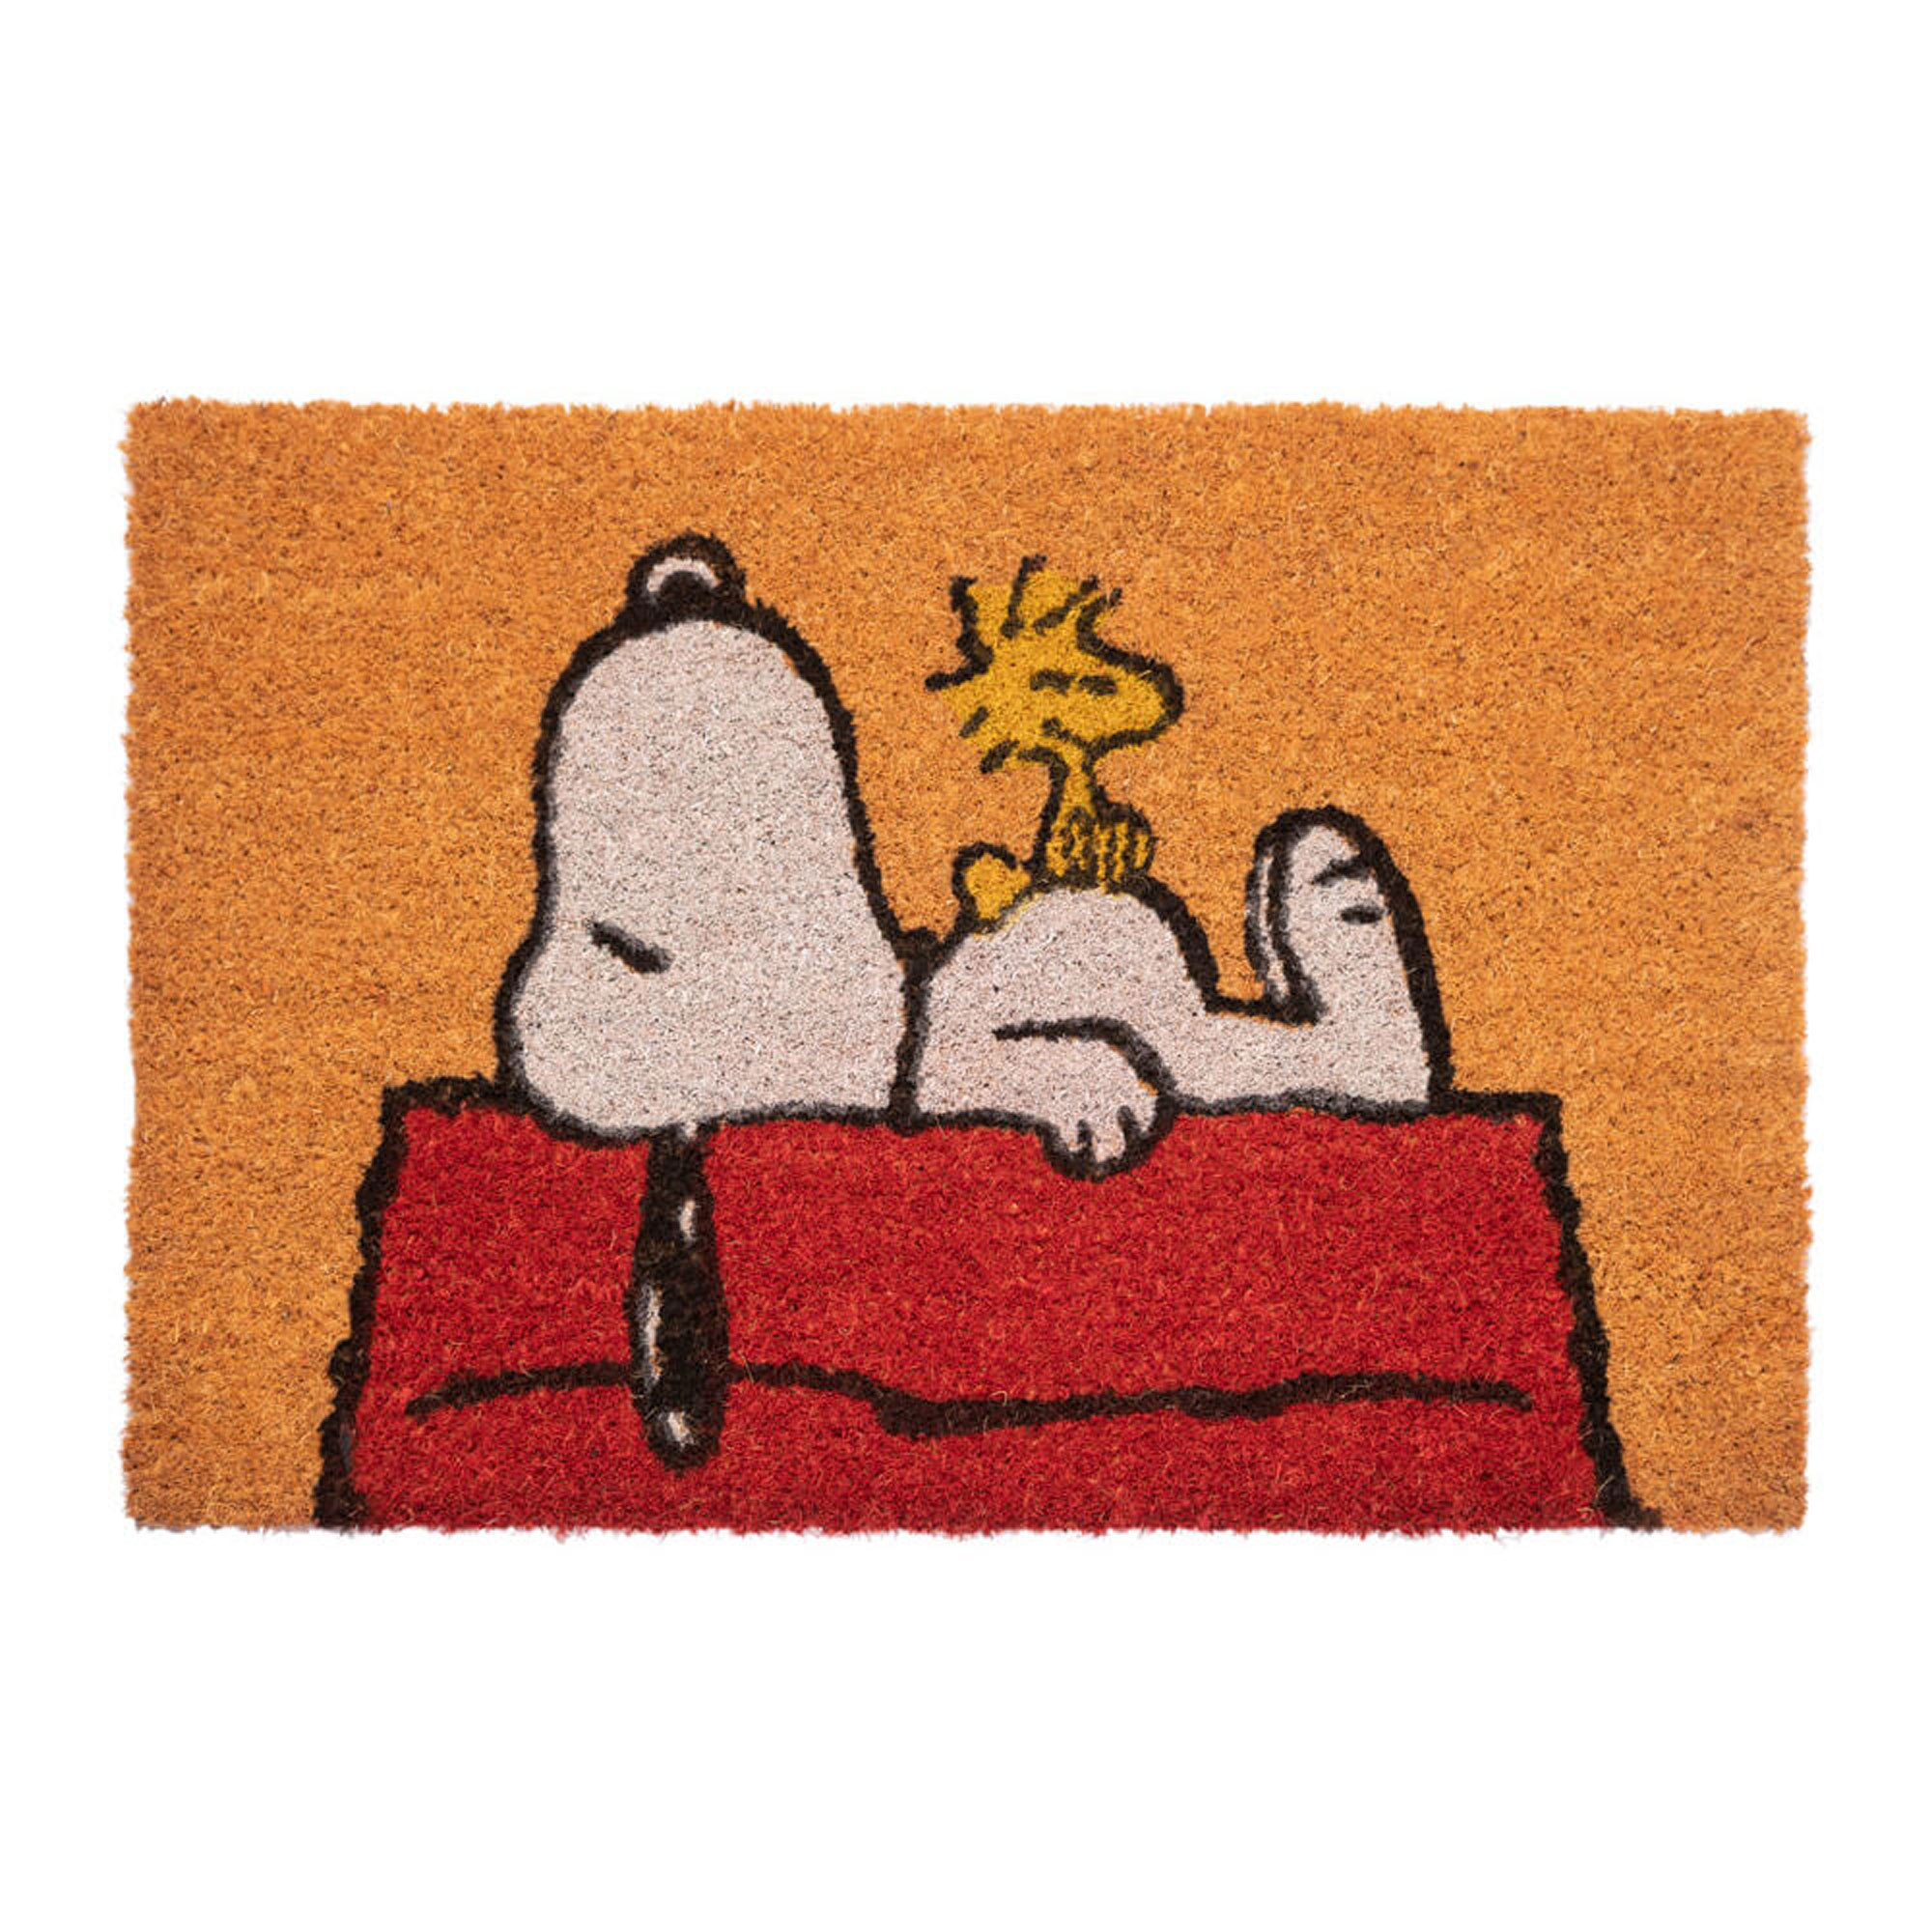 Snoopy Kokos - Fußmatte